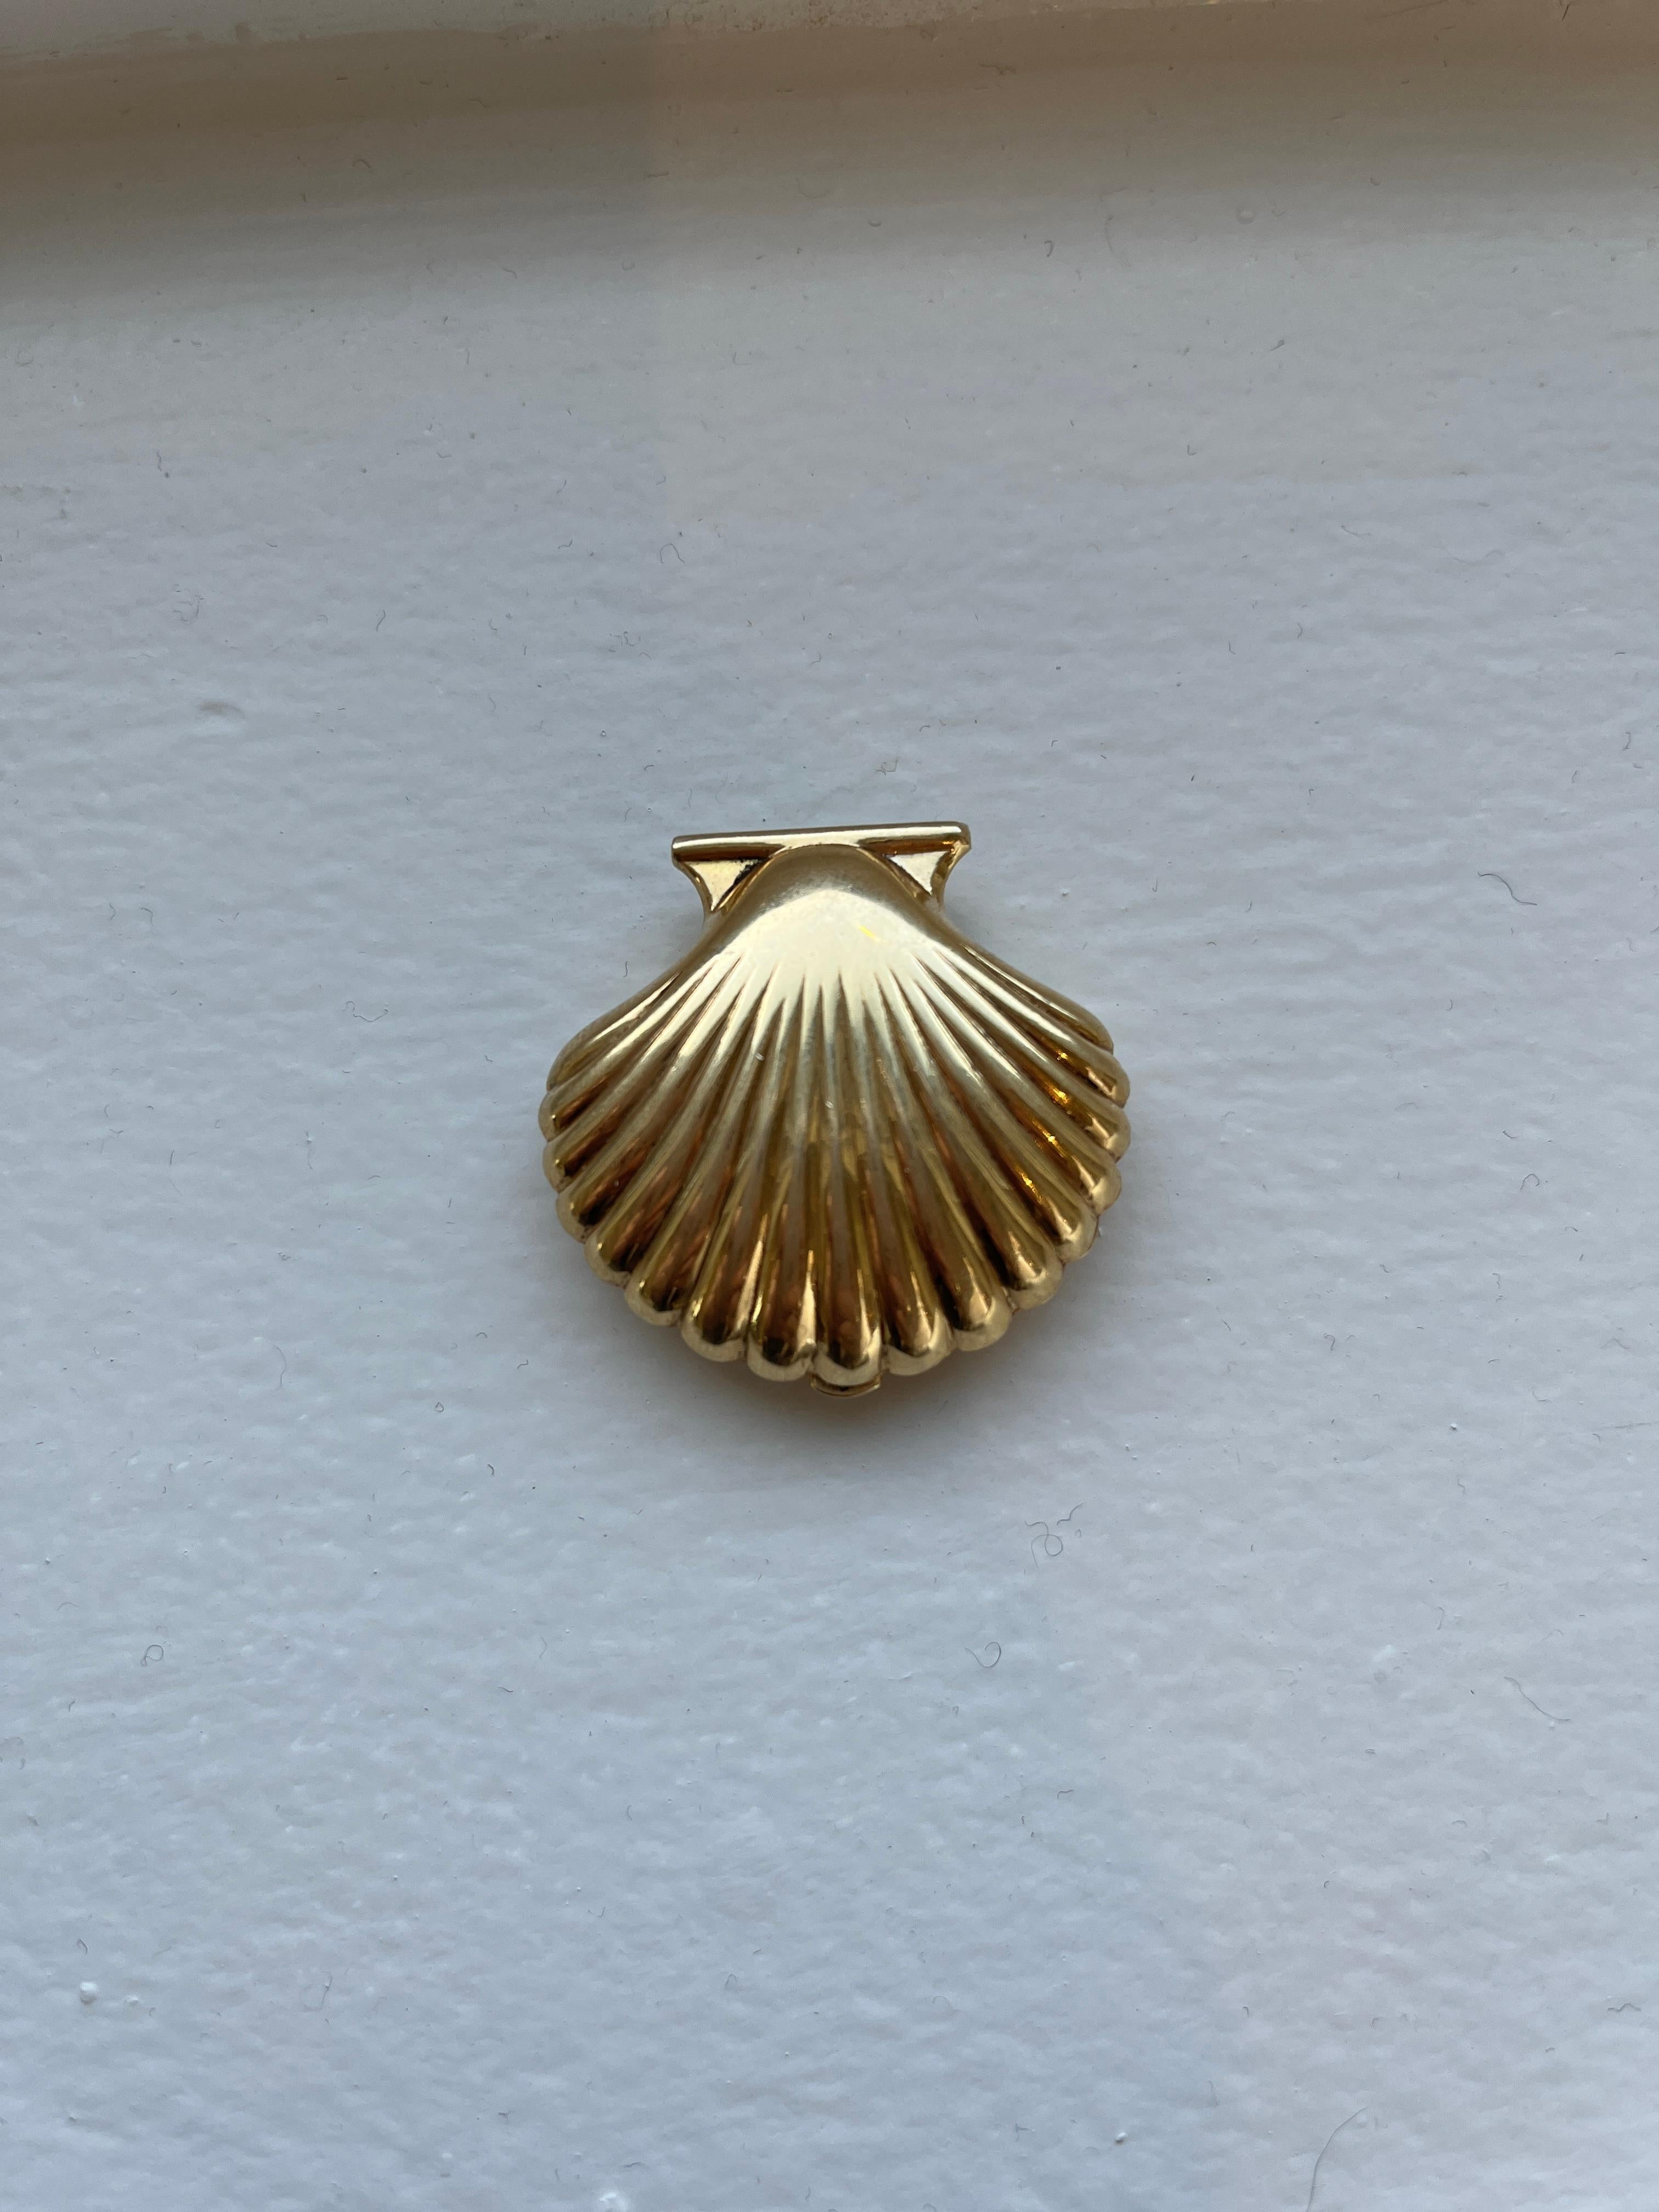 gold seashell compact mirror